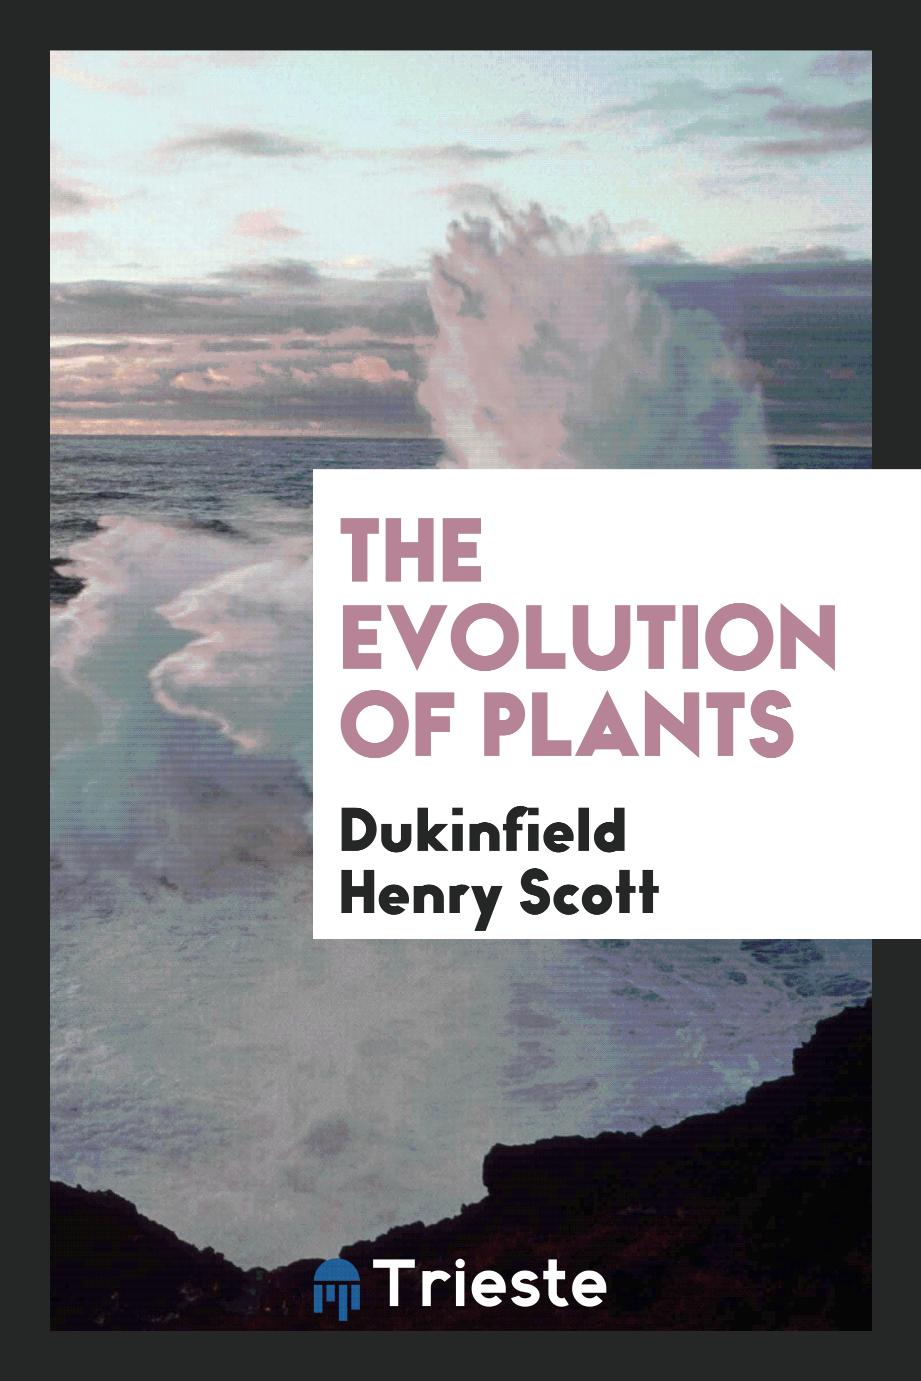 The evolution of plants